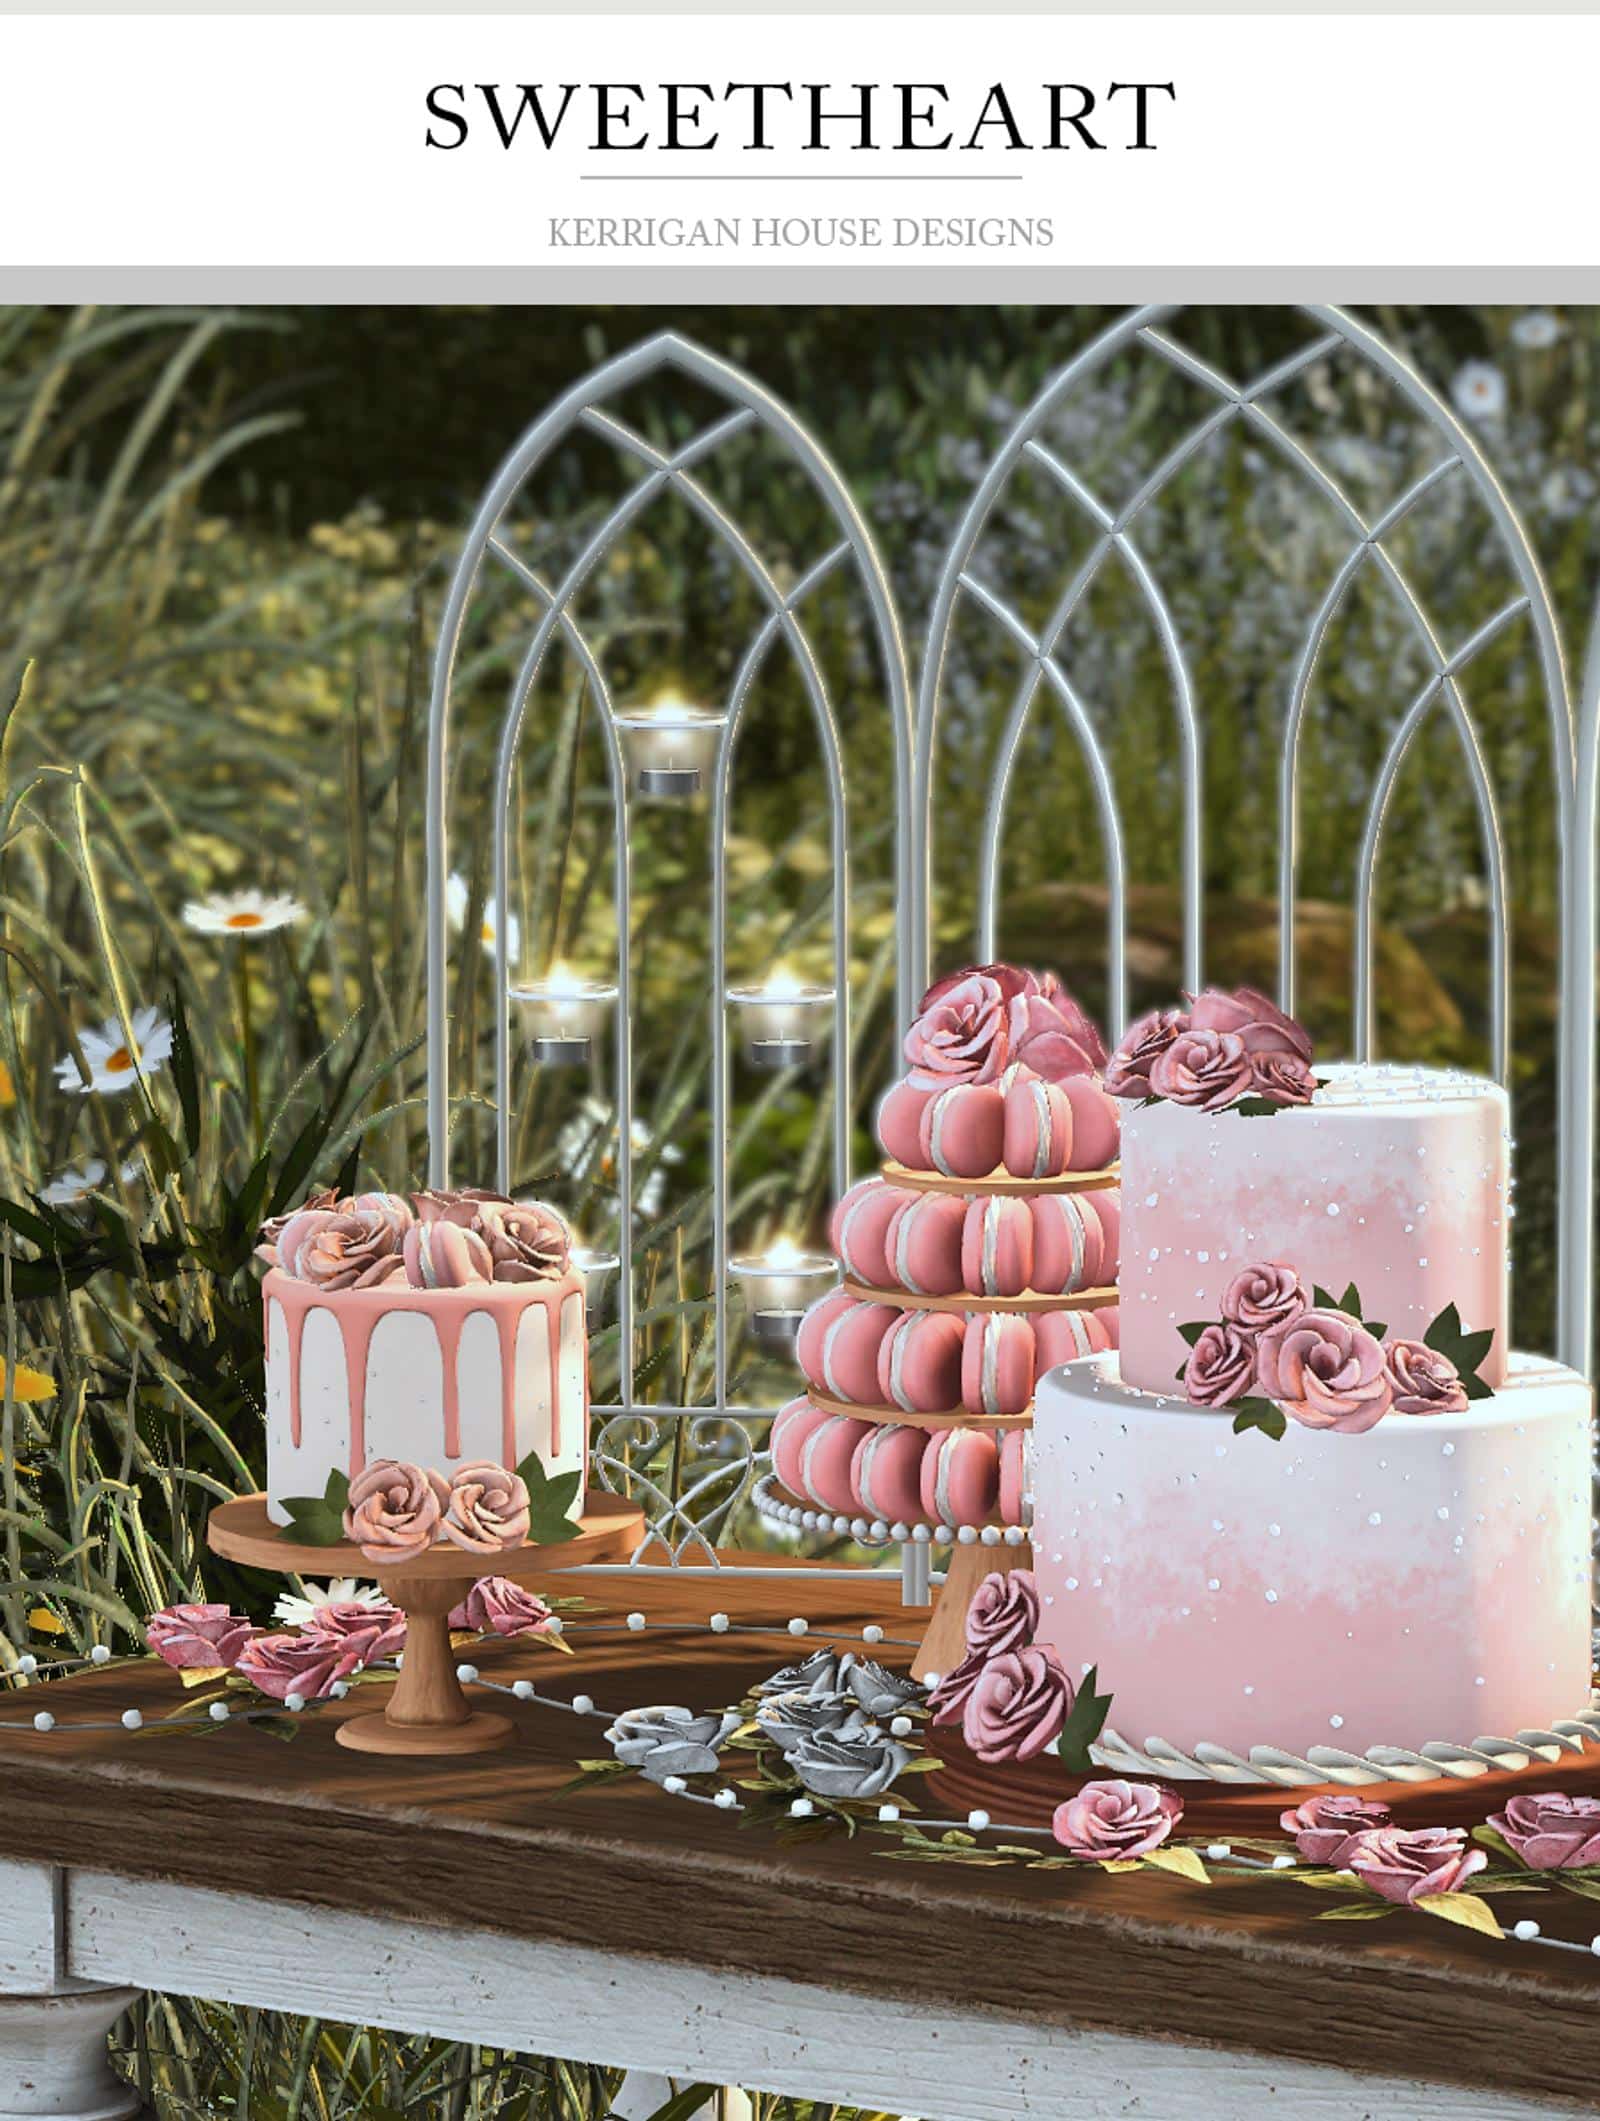 khd sweetheart cake set kerrigan house designs